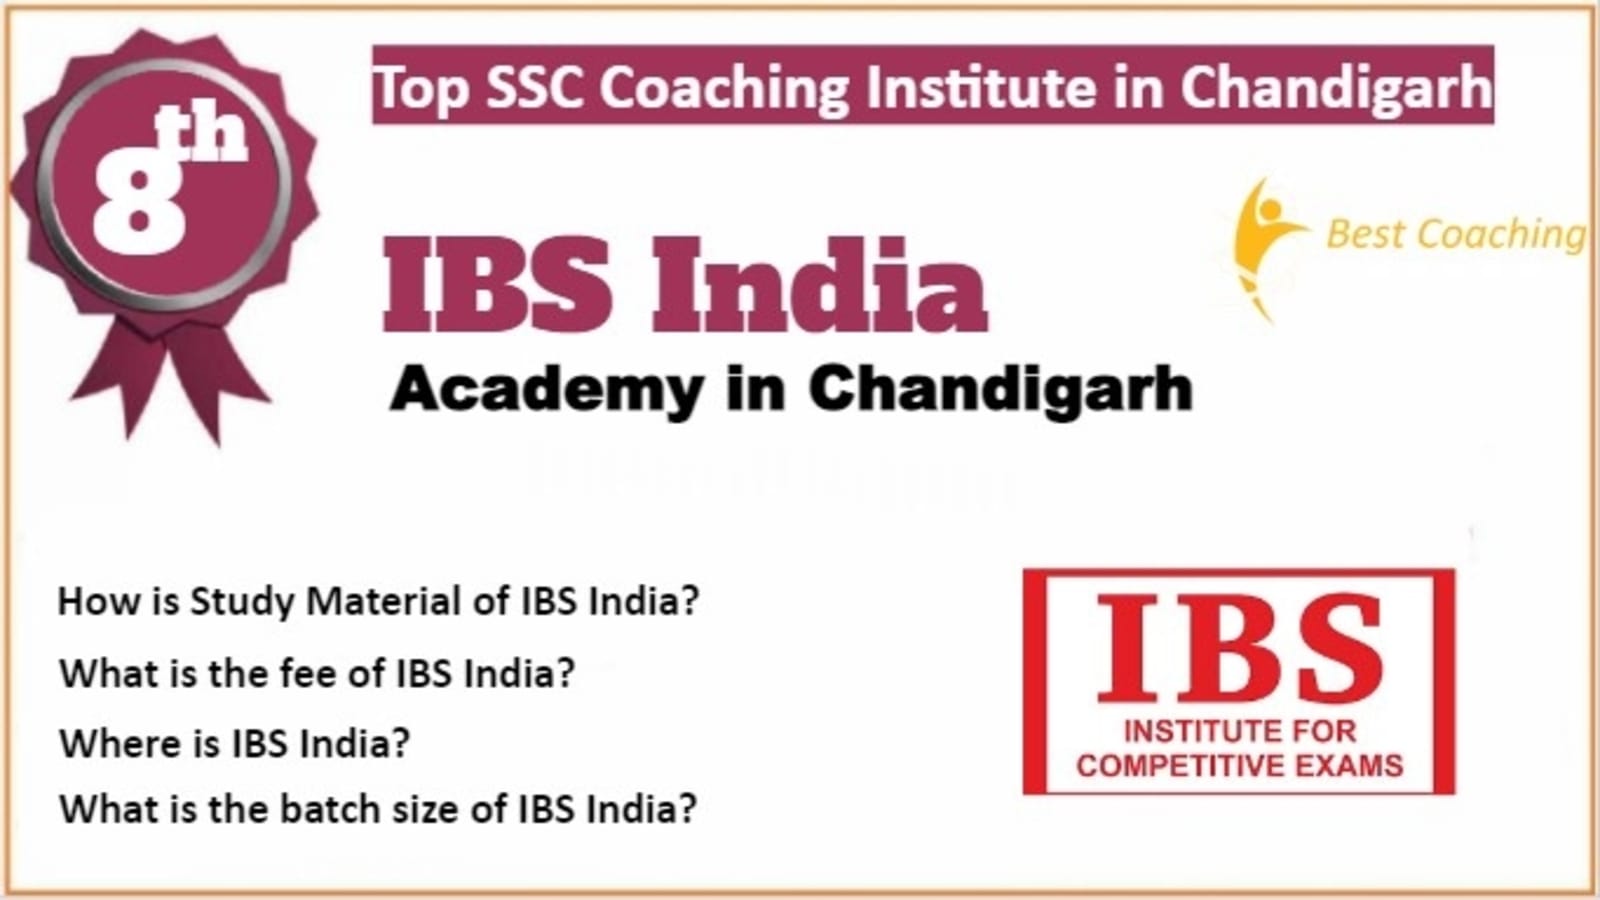 Rank 8 Best SSC Coaching in Chandigarh